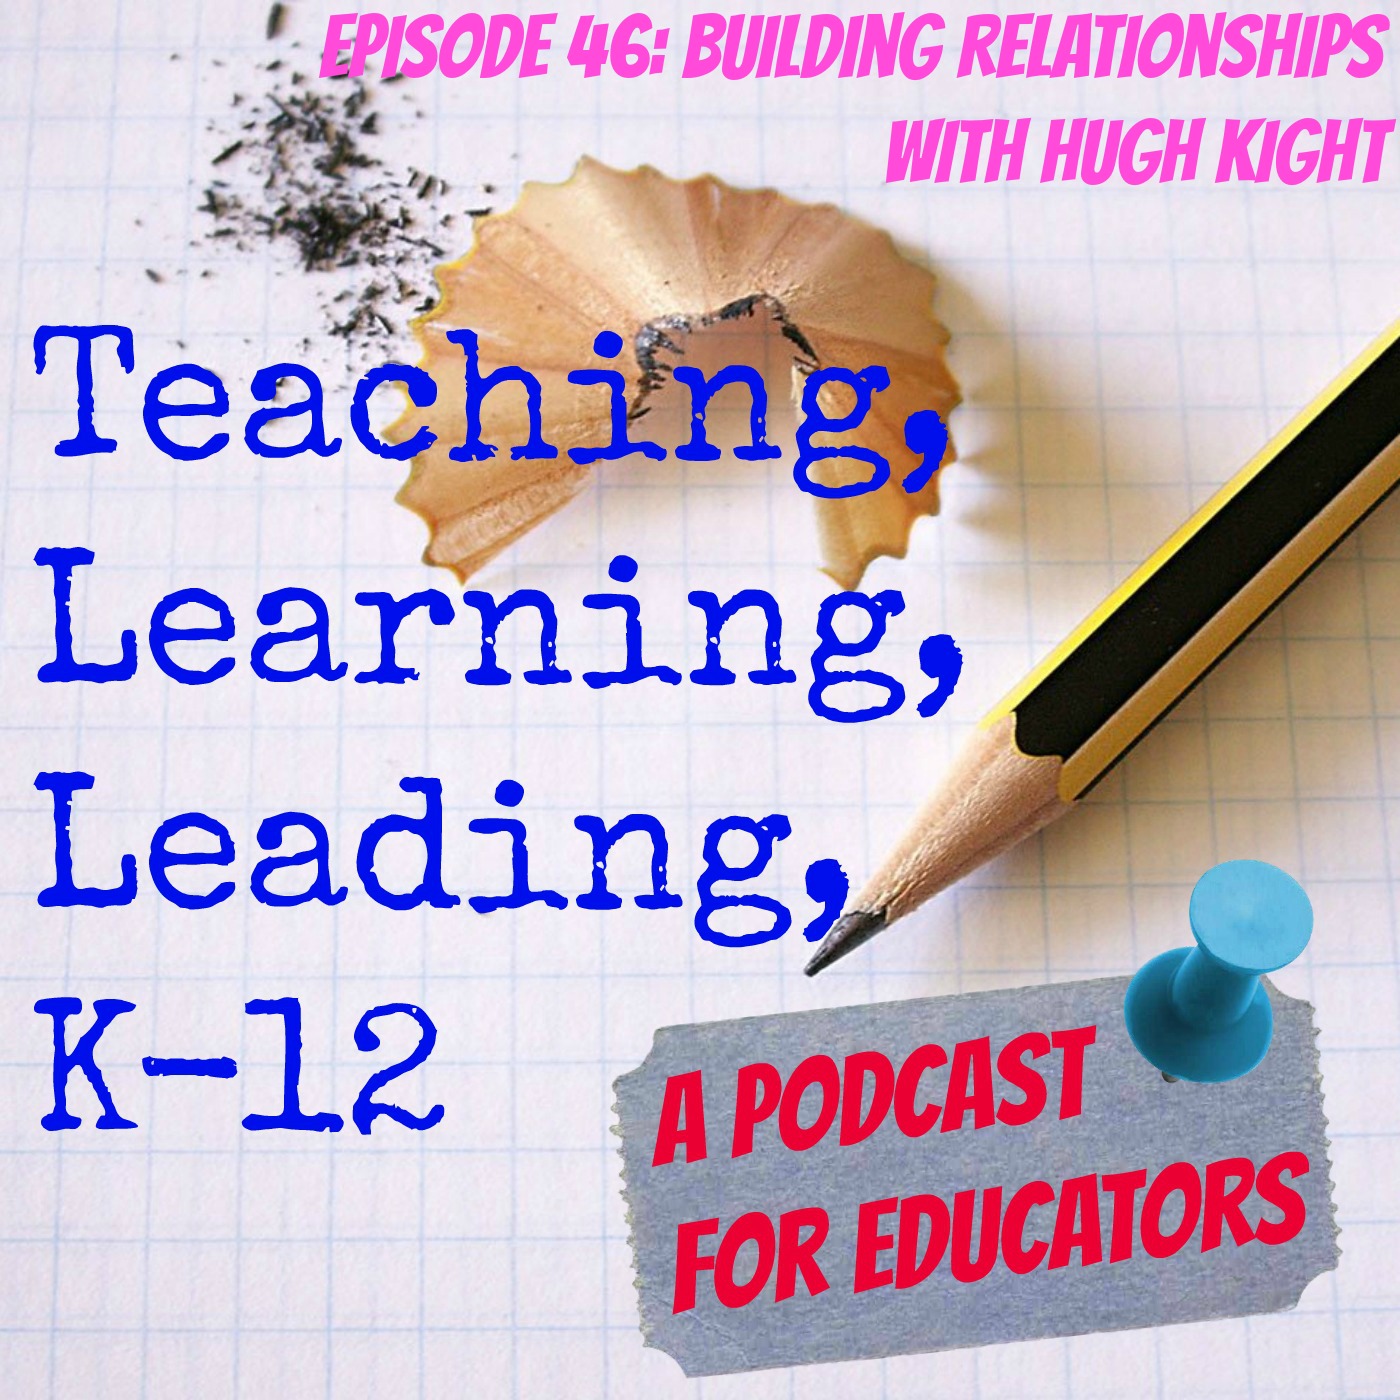 Episode 46: Building Relationships with Hugh Kight